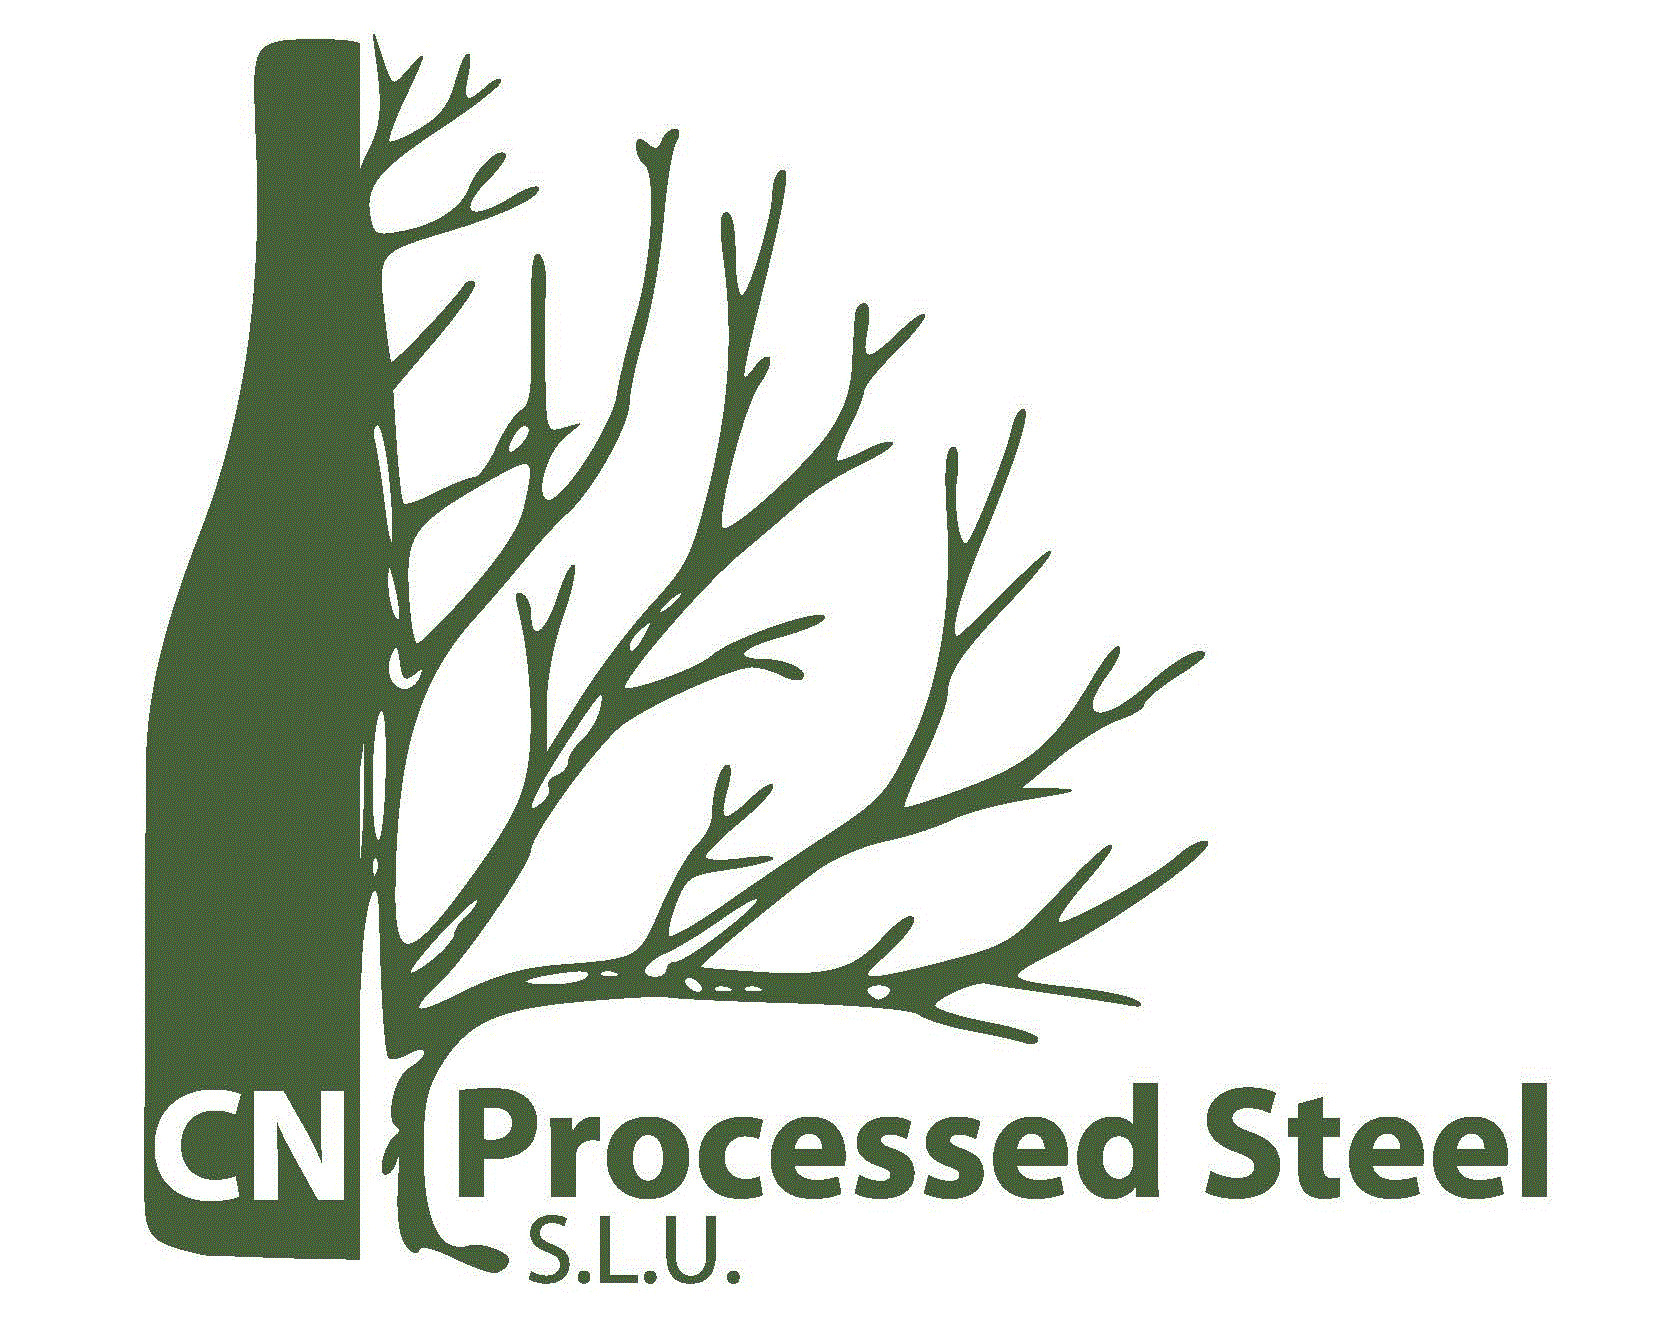 CN Processed Steel